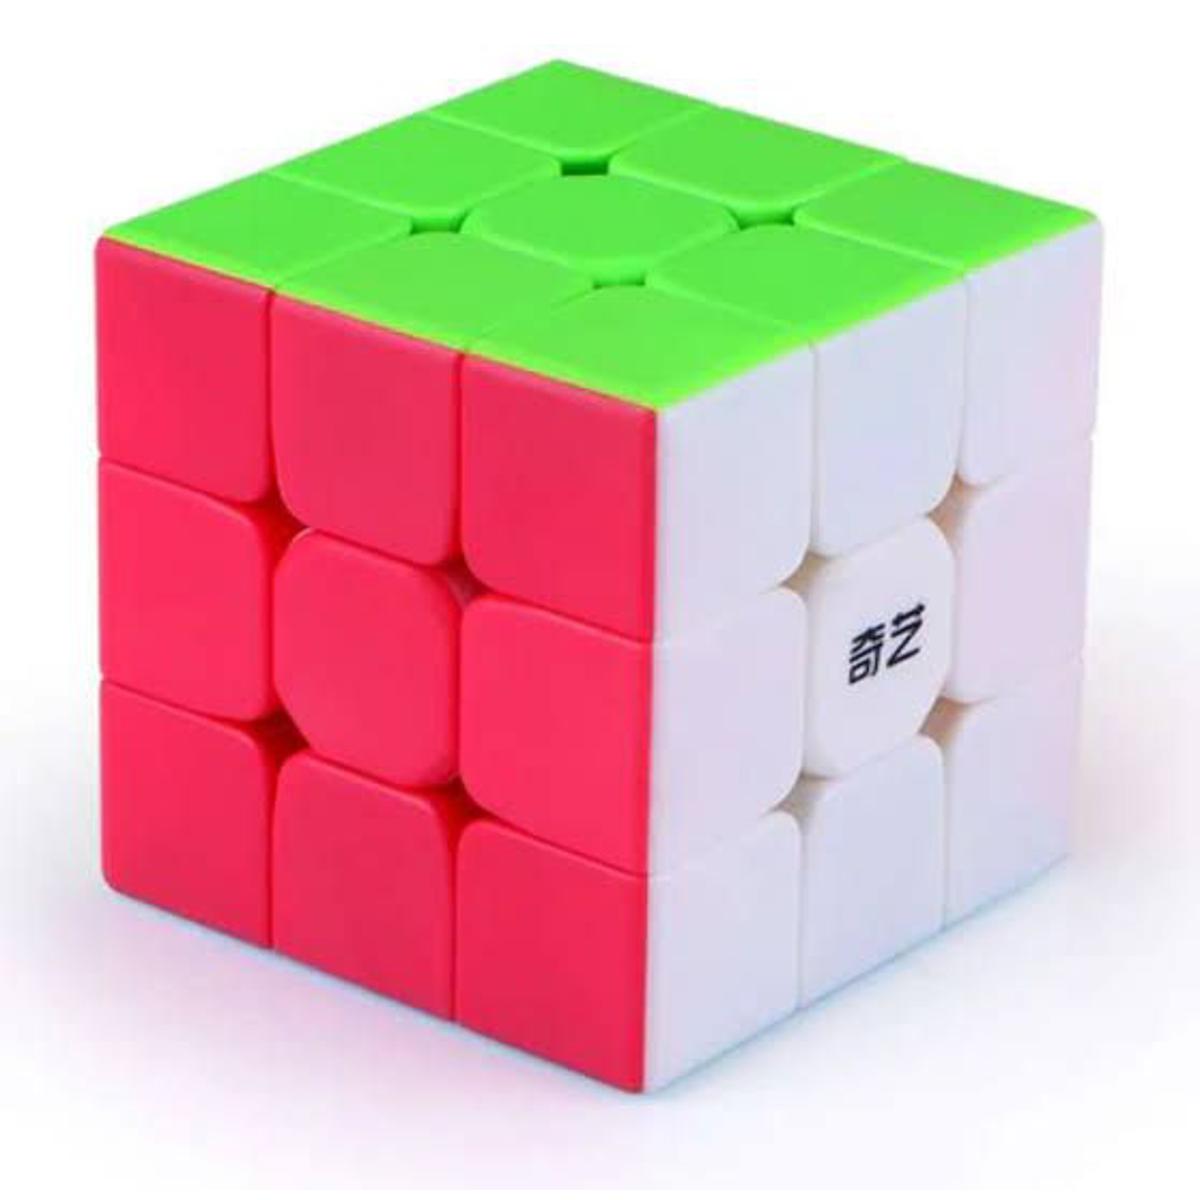 Rubik's Classic Cube 3x3